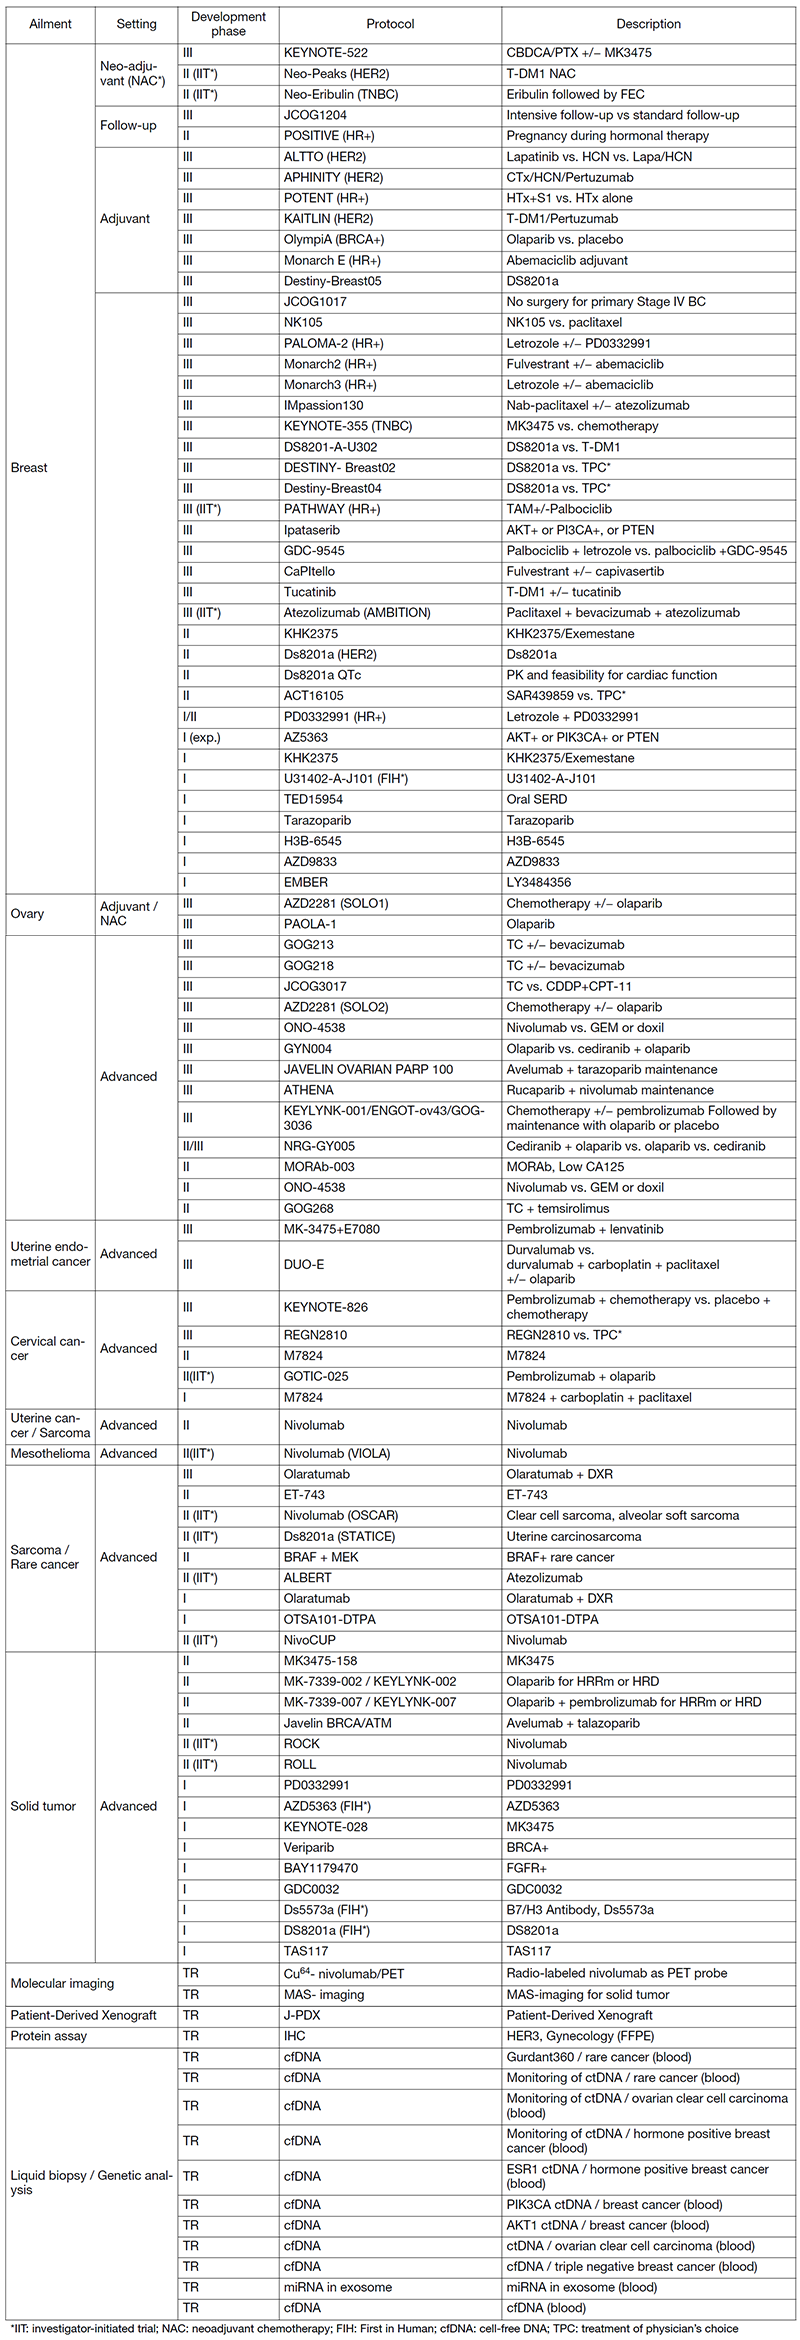 Table 2. Active clinical trials (Apr. 2020 - Mar. 2021)